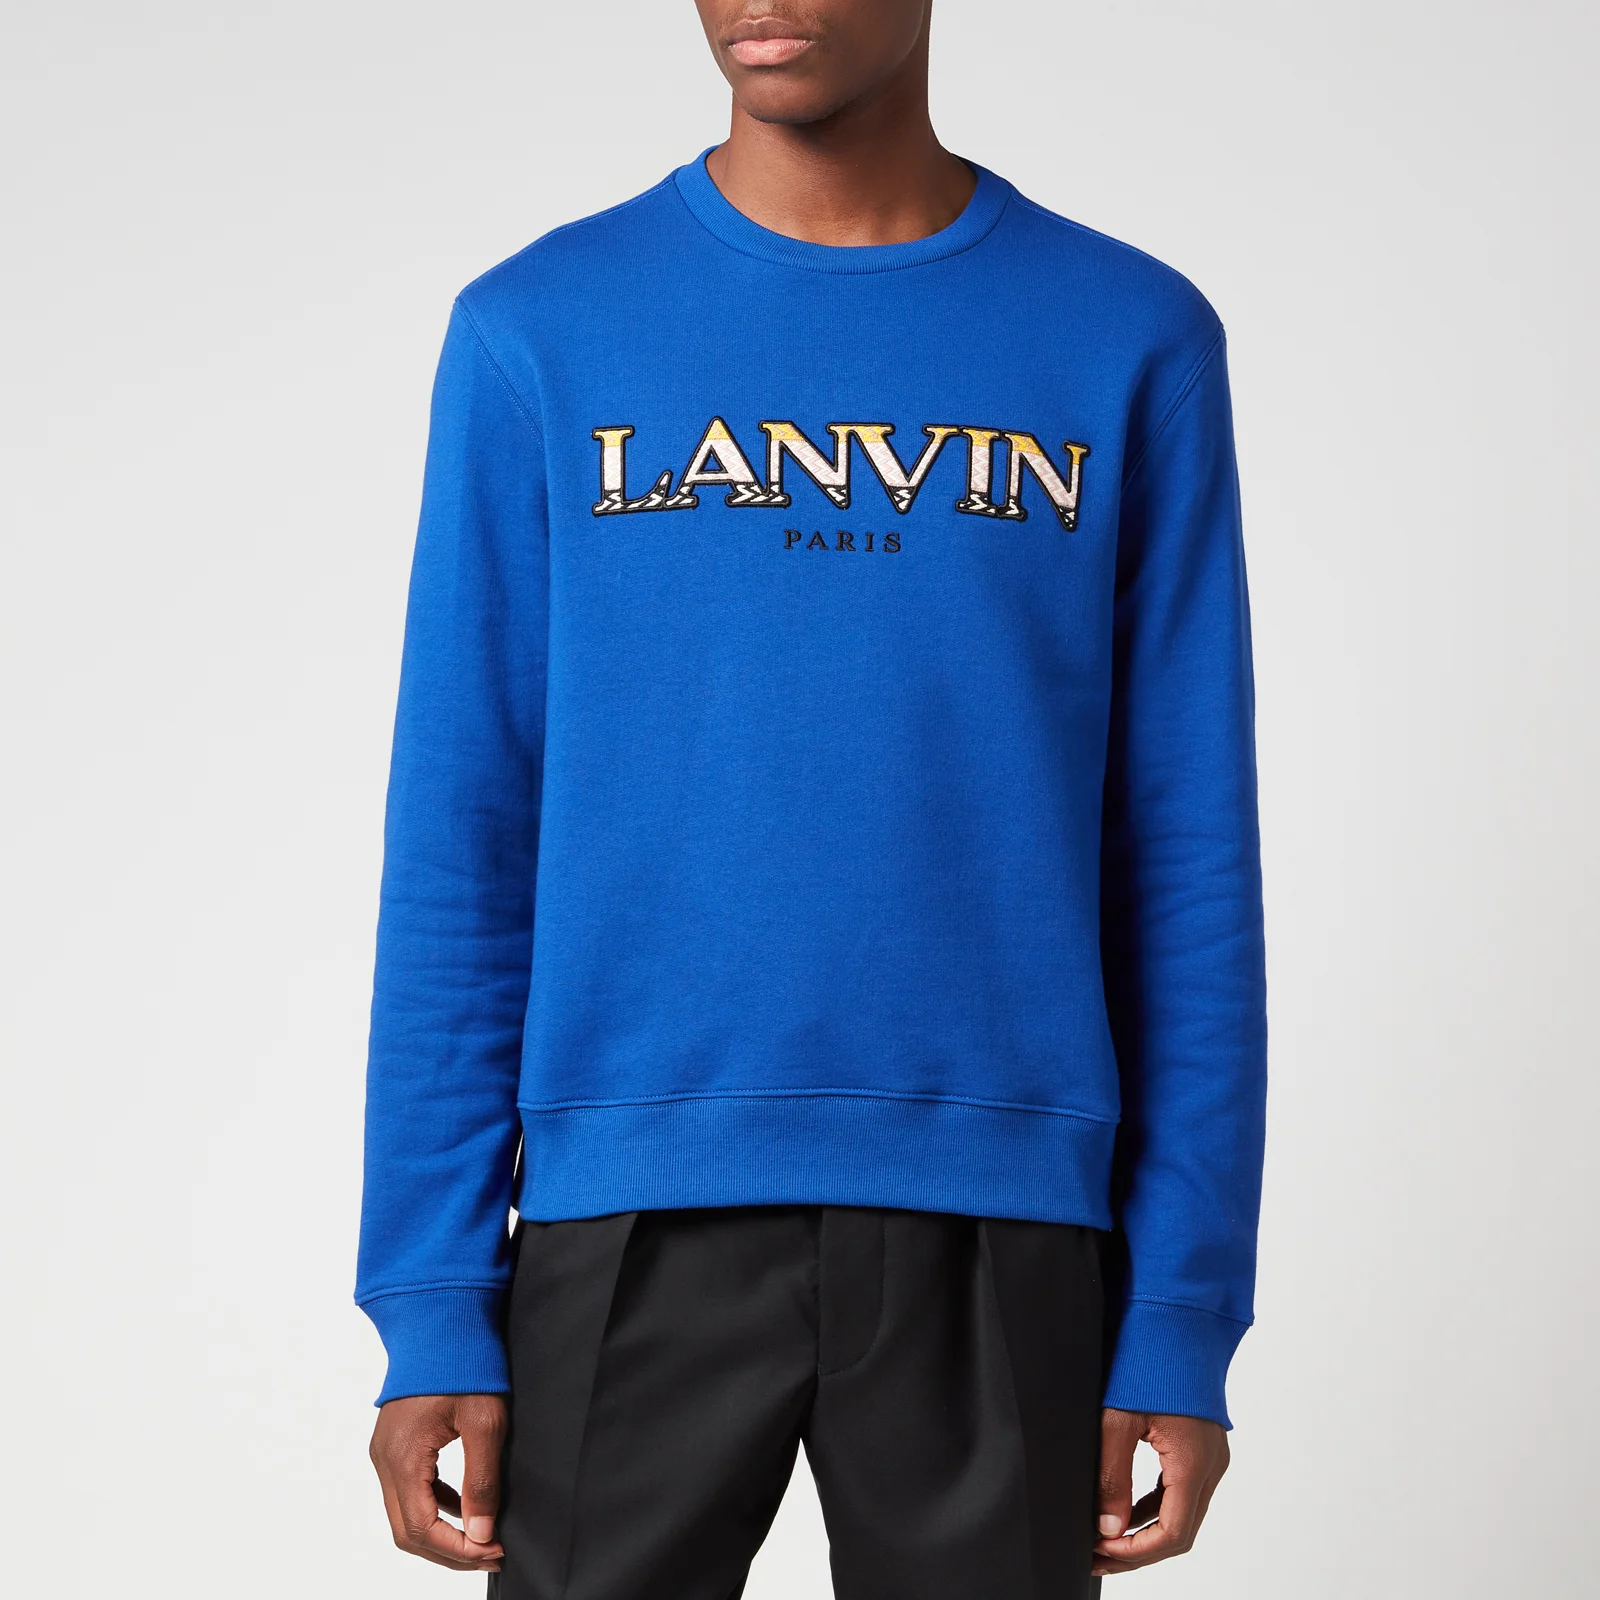 Lanvin Men's Curb Lace Embroidered Sweatshirt - Klein Blue Image 1